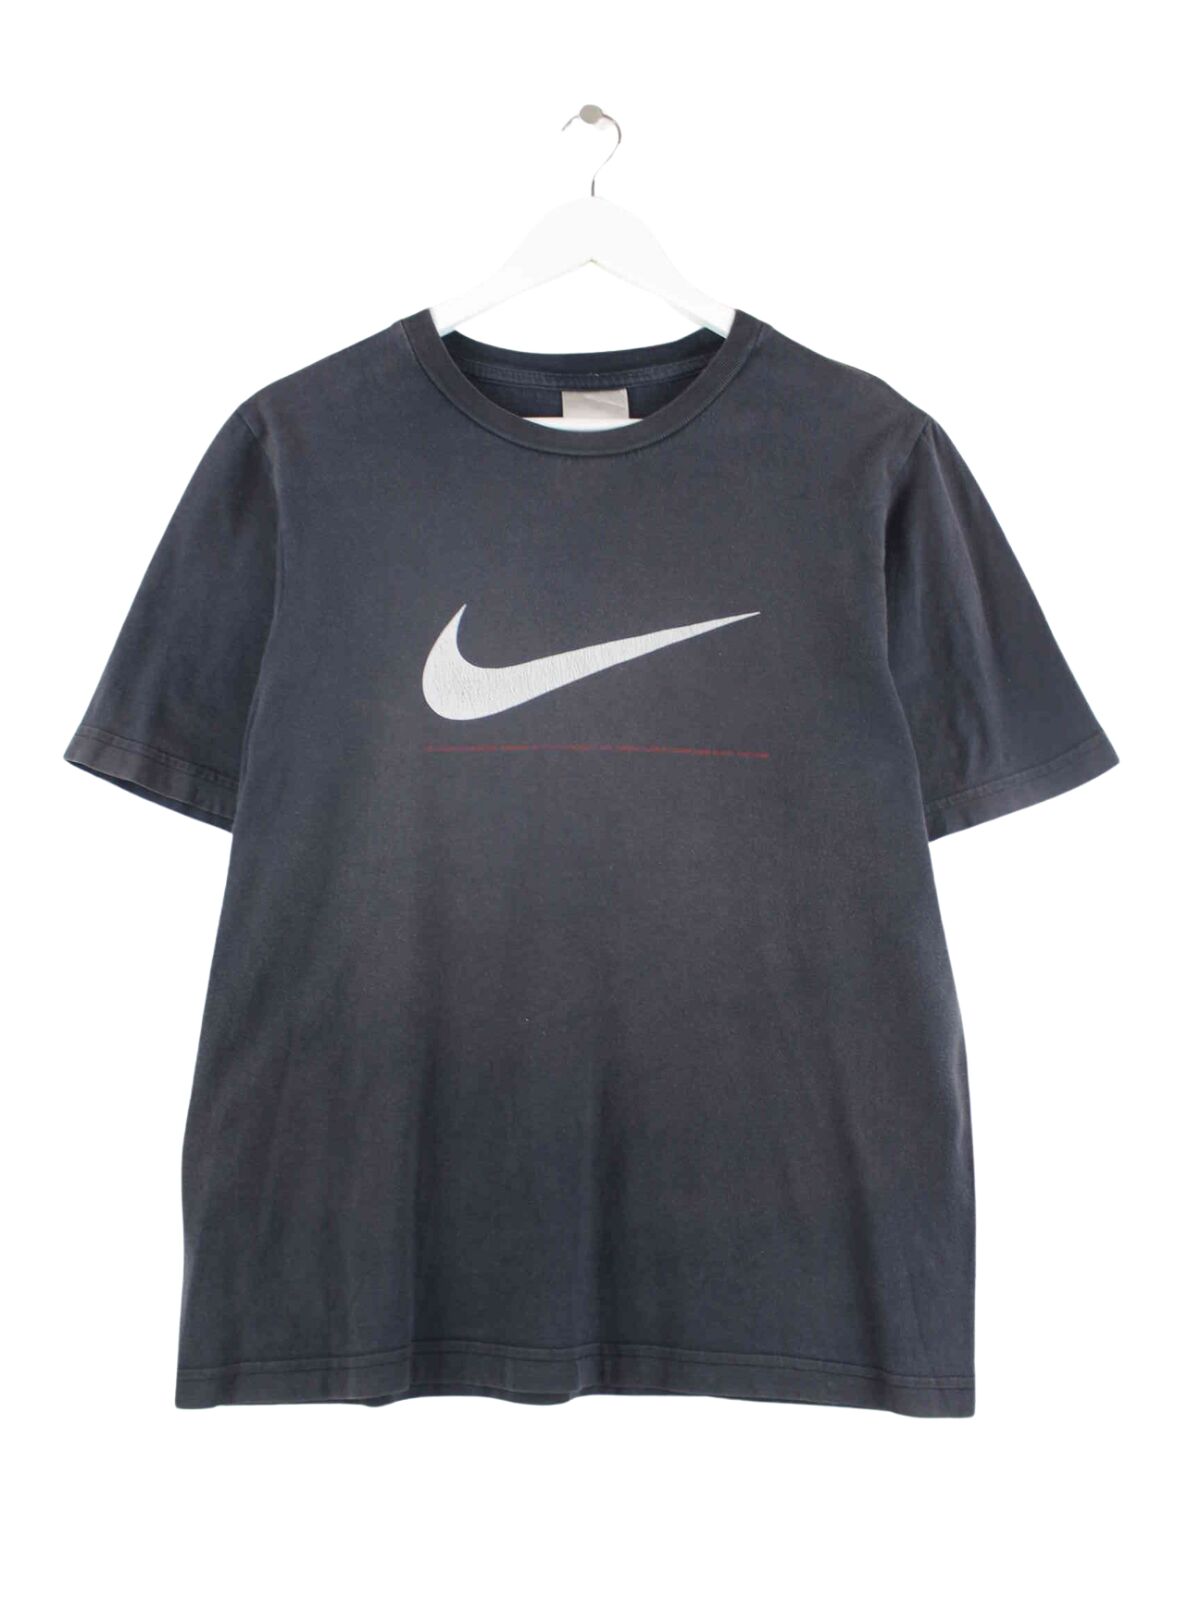 Nike 90s Vintage Big Swoosh Print T-Shirt Grau S (front image)